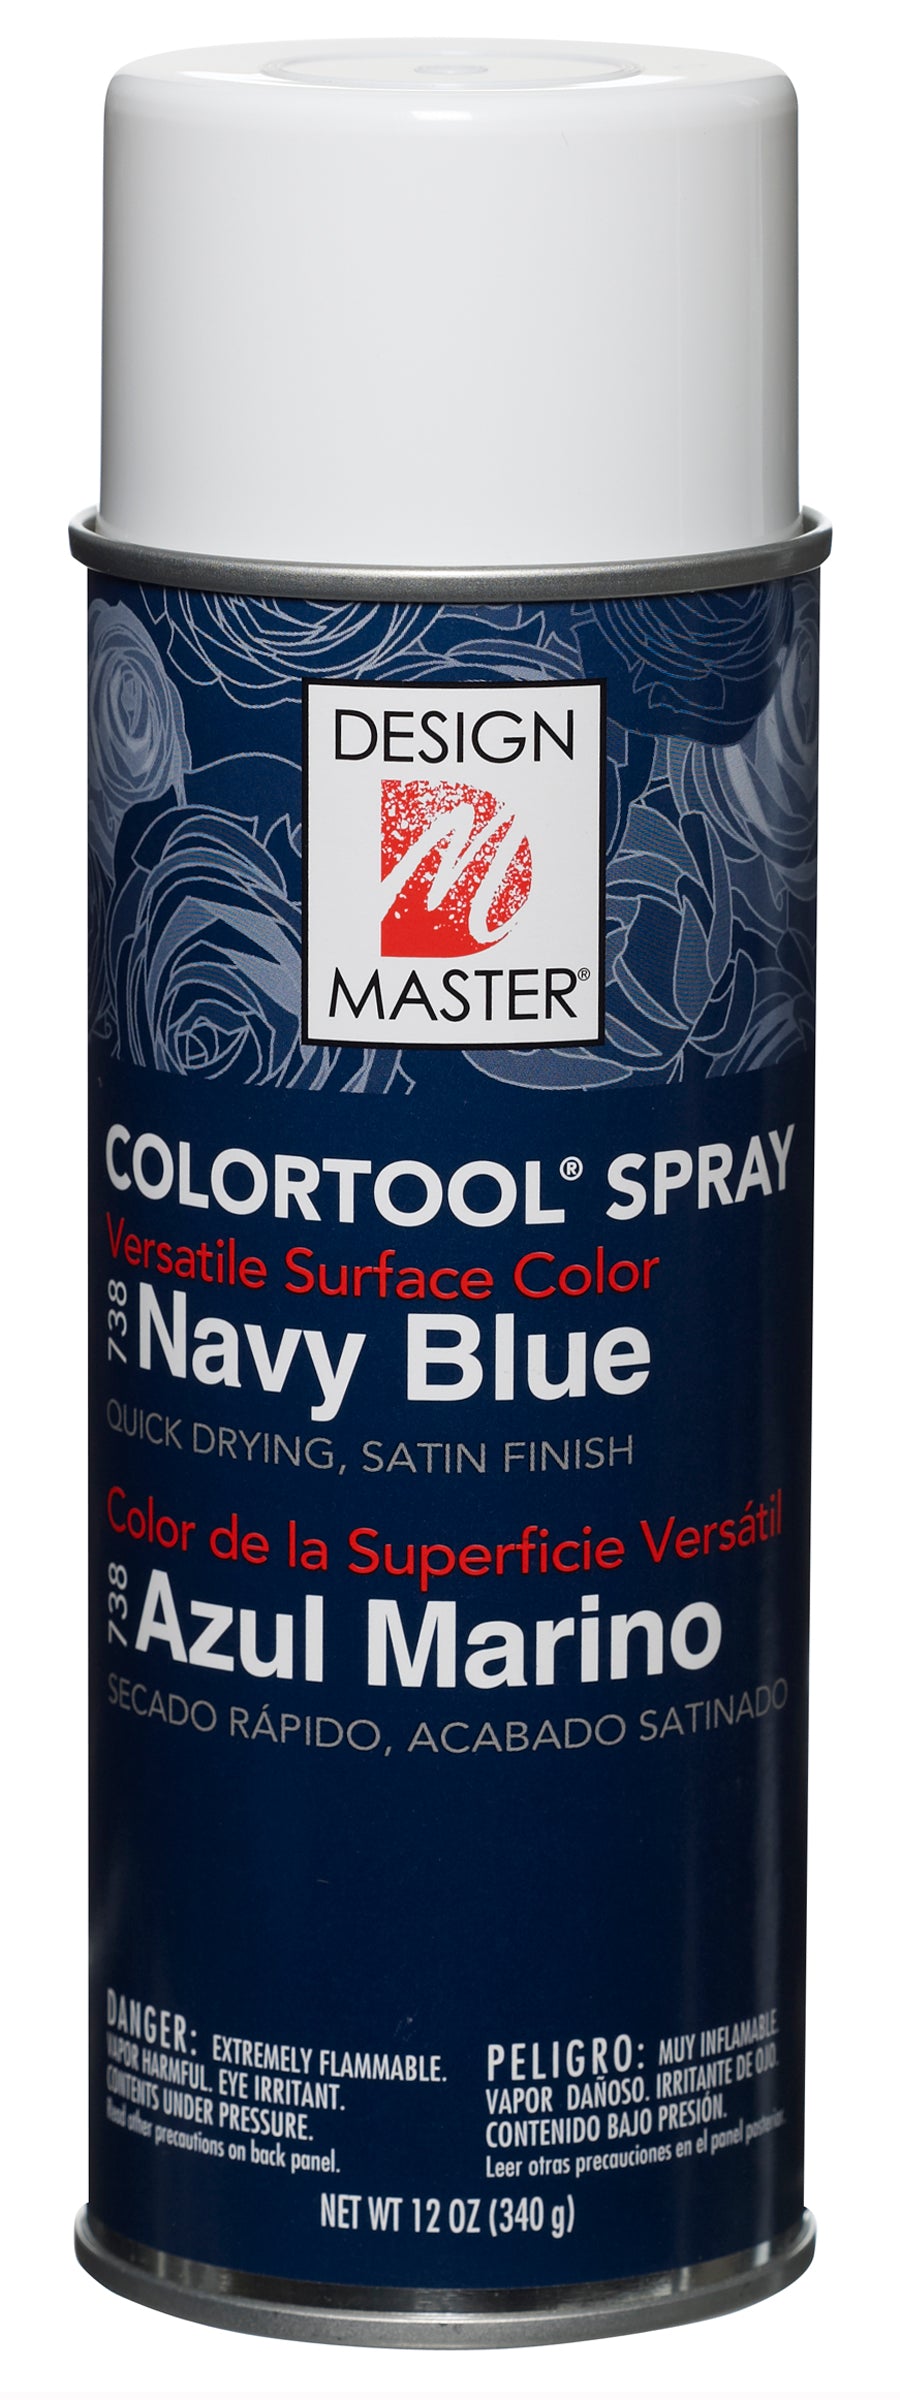 Design Master Colortool Spray-Navy Blue